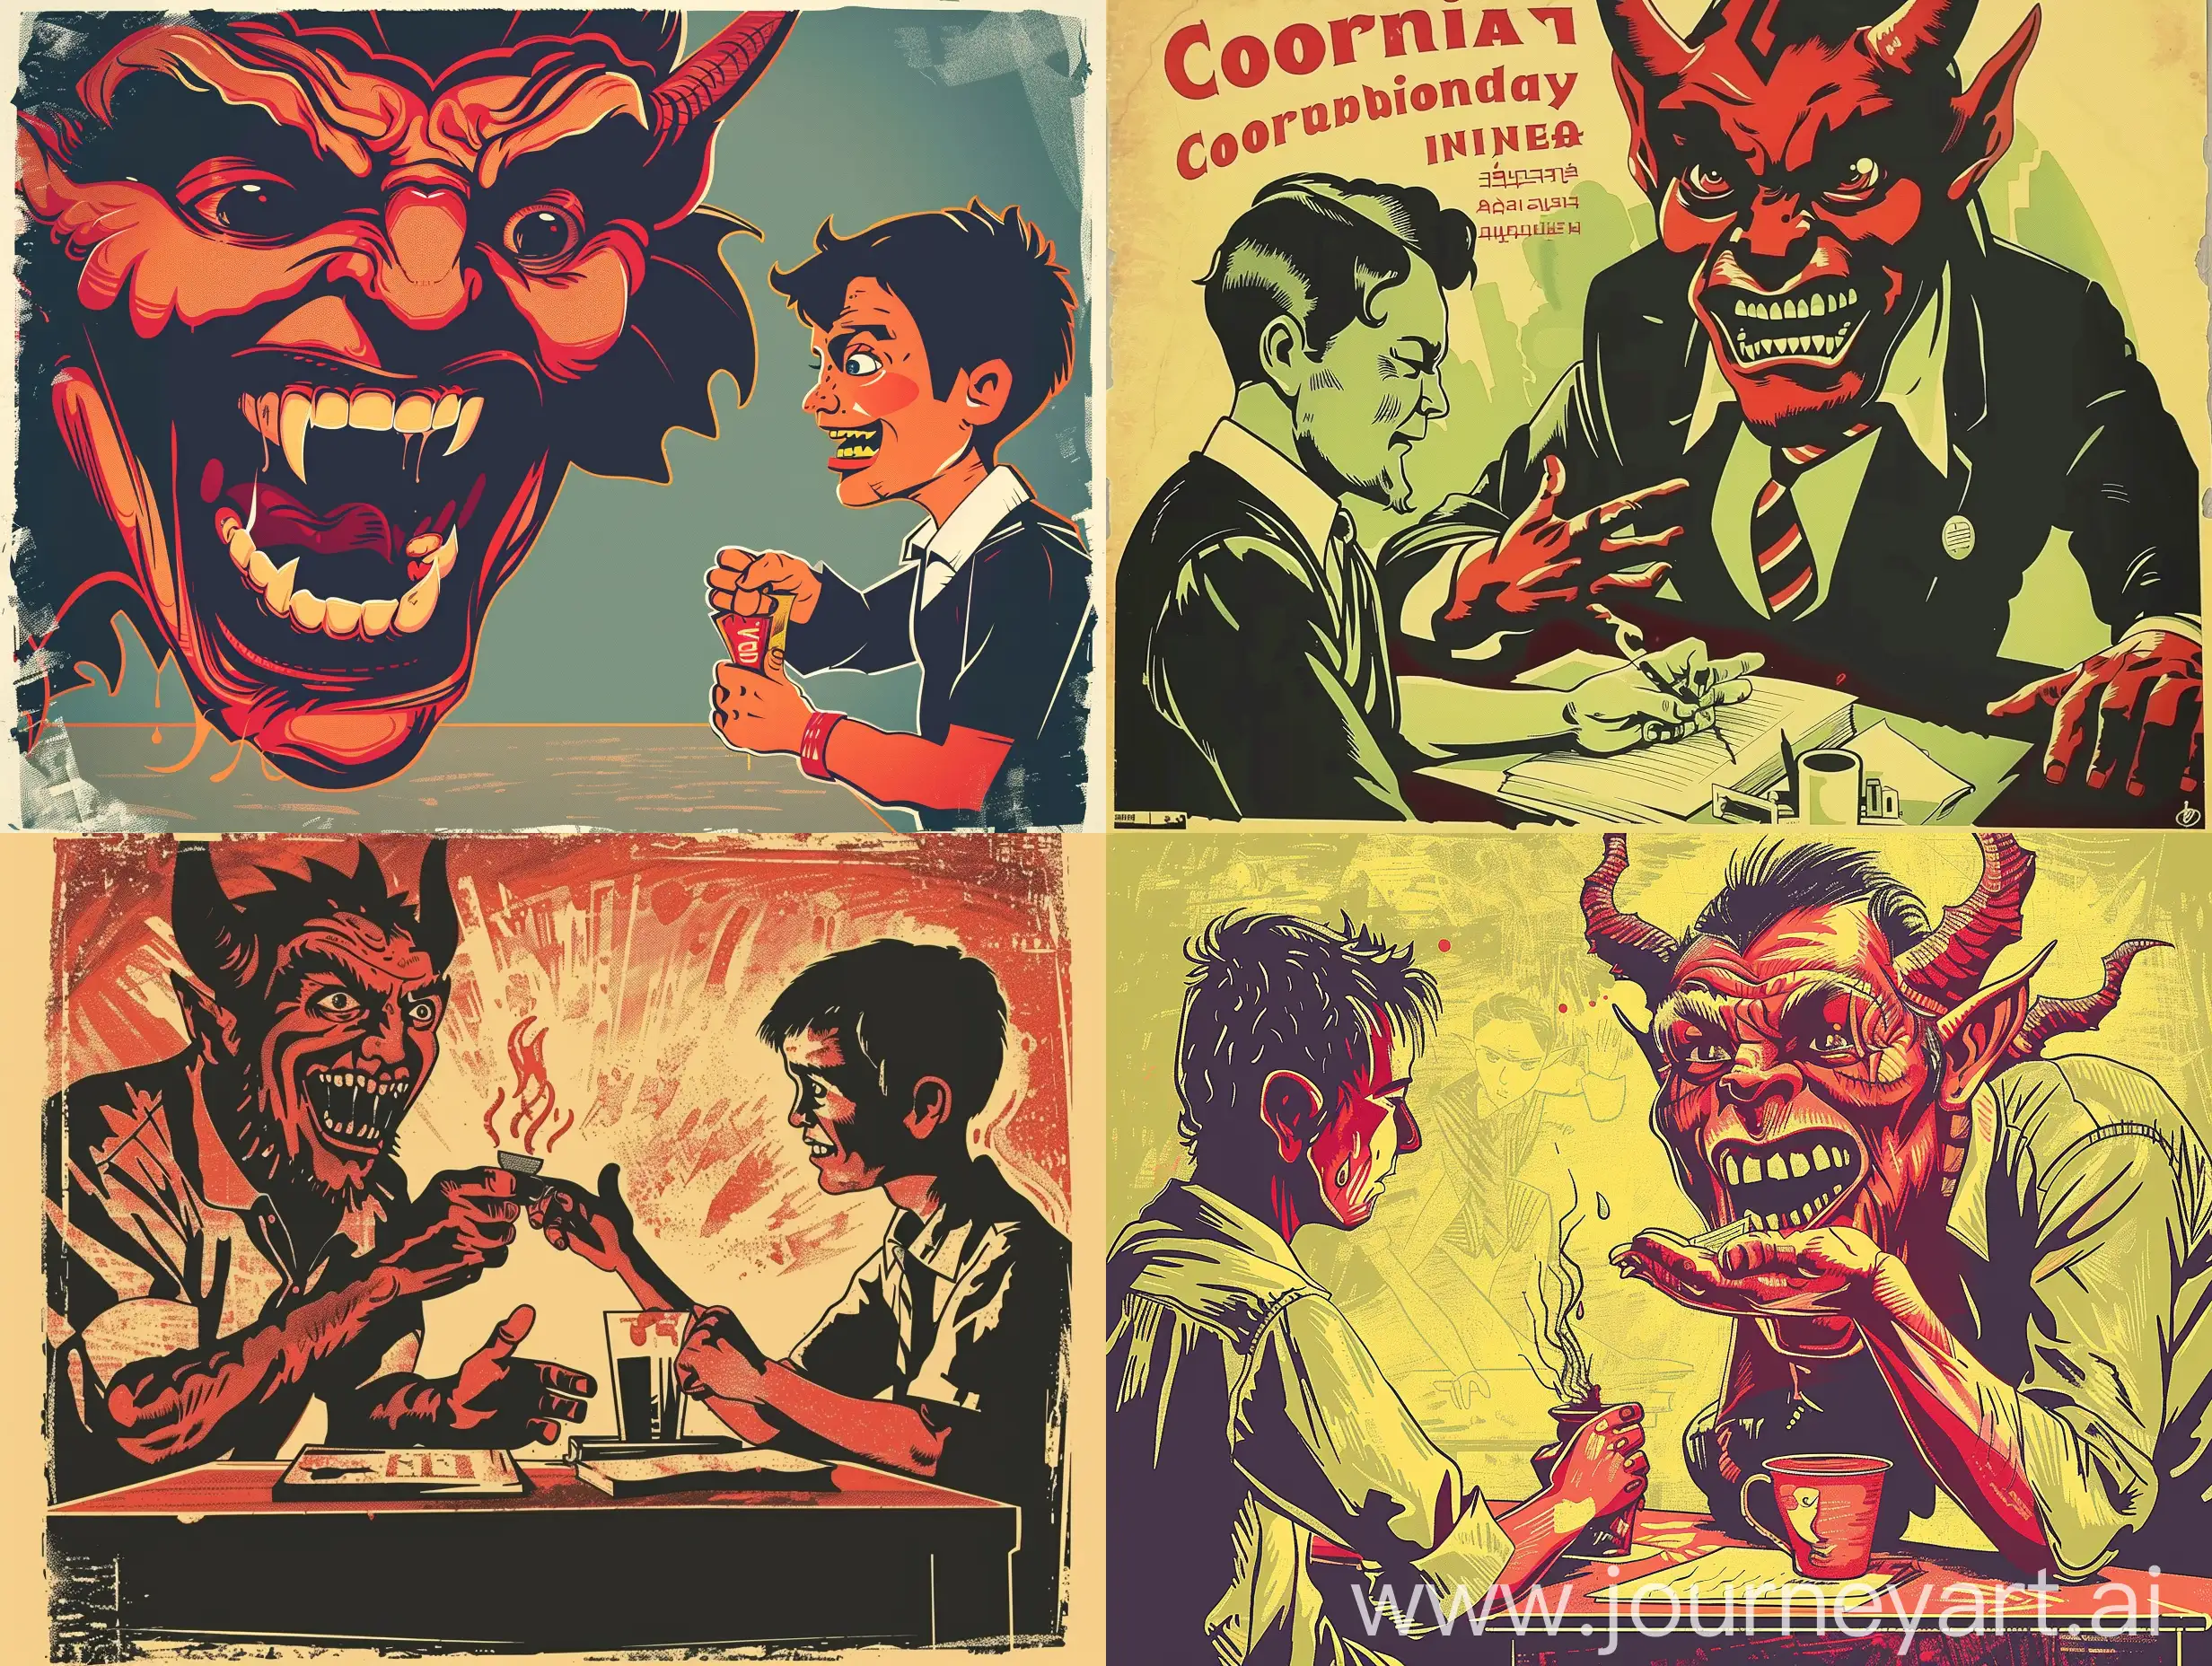 AntiCorruption-Poster-Teacher-Confronts-Devilish-Bribery